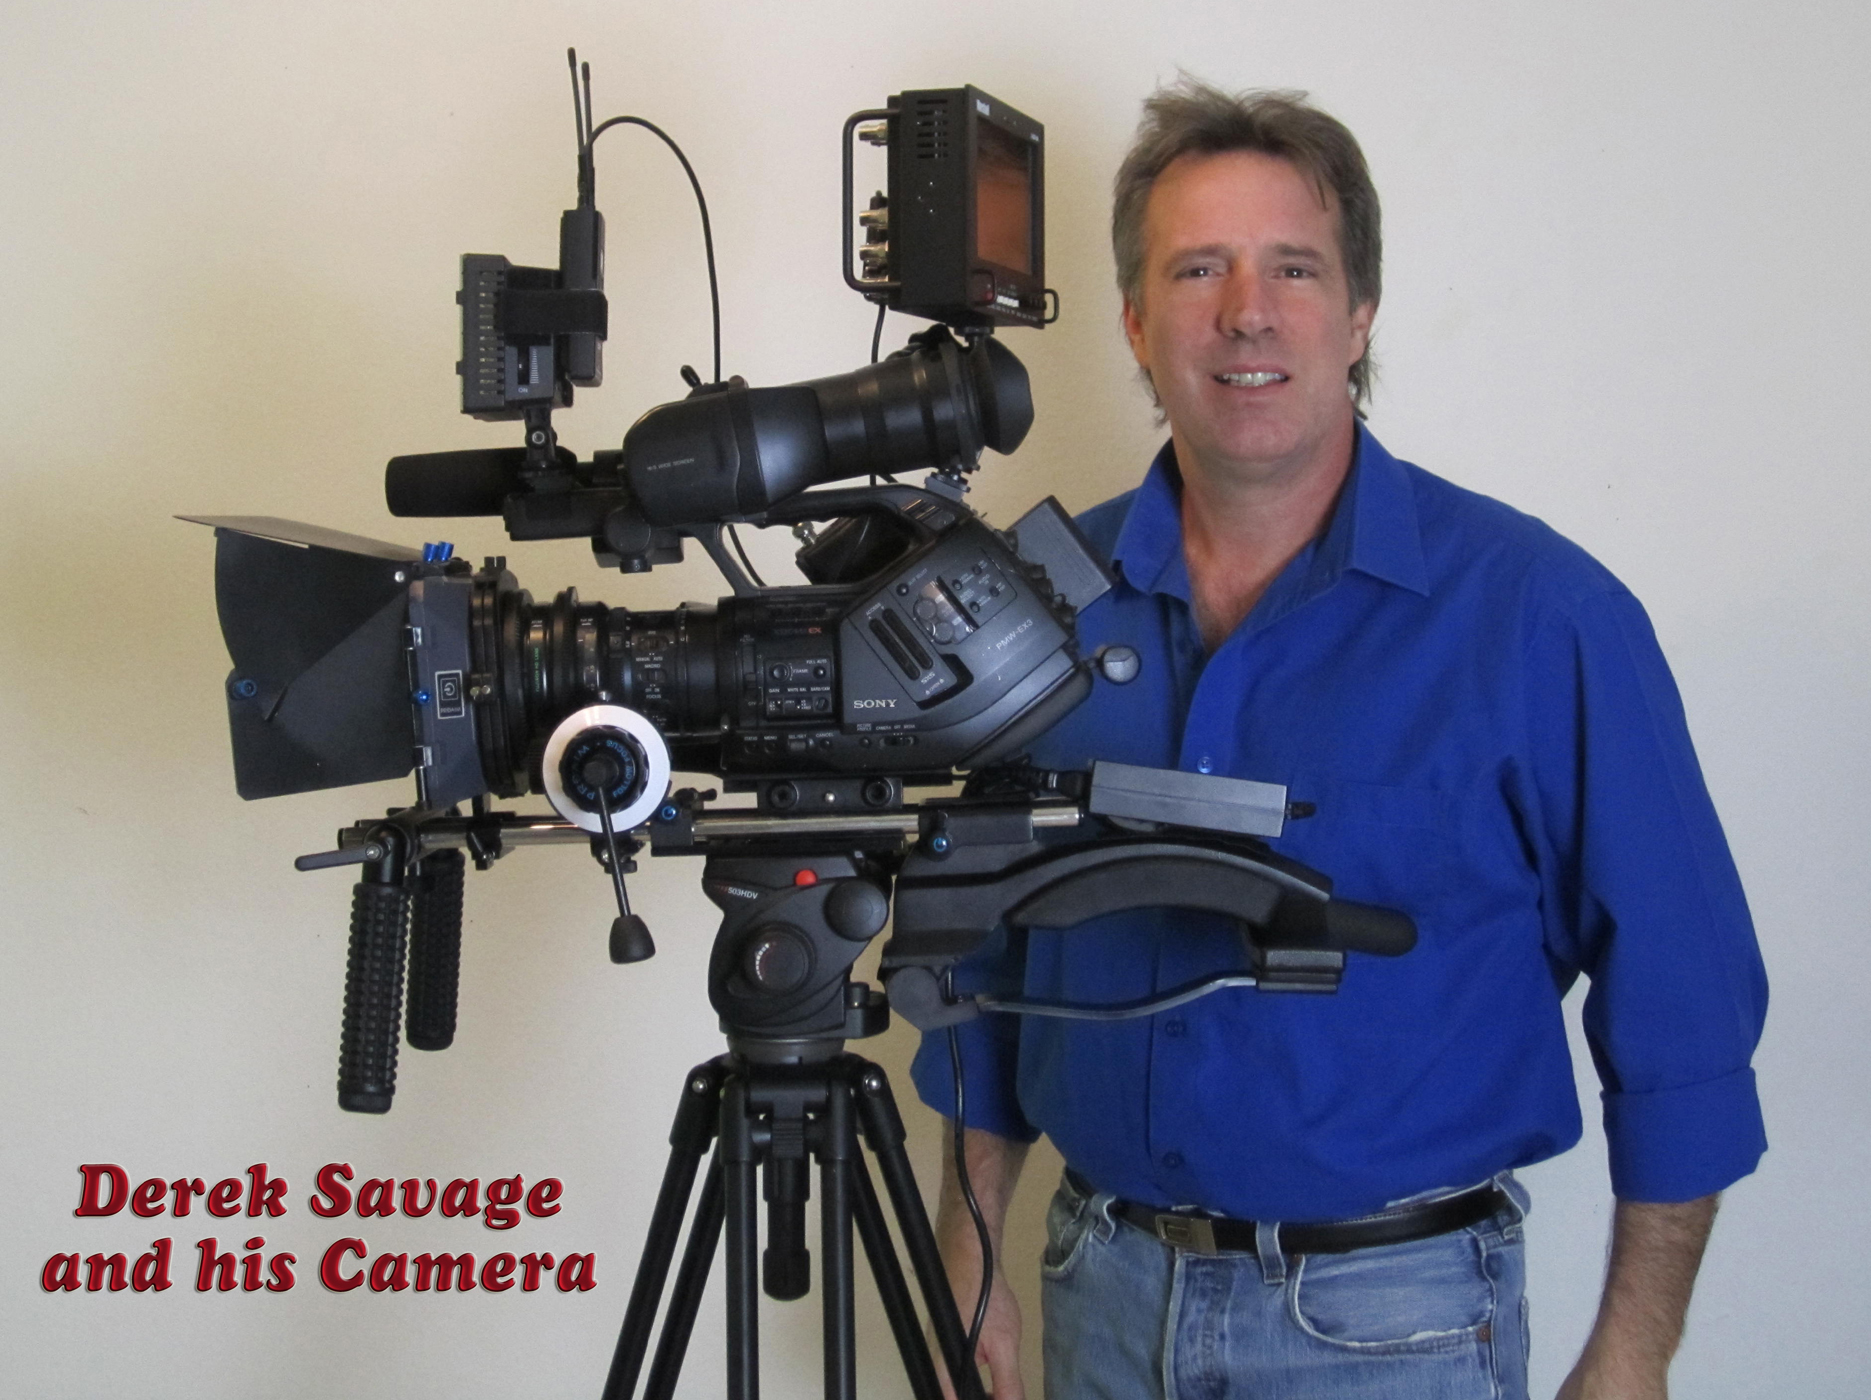 Derek Savage and his Camera